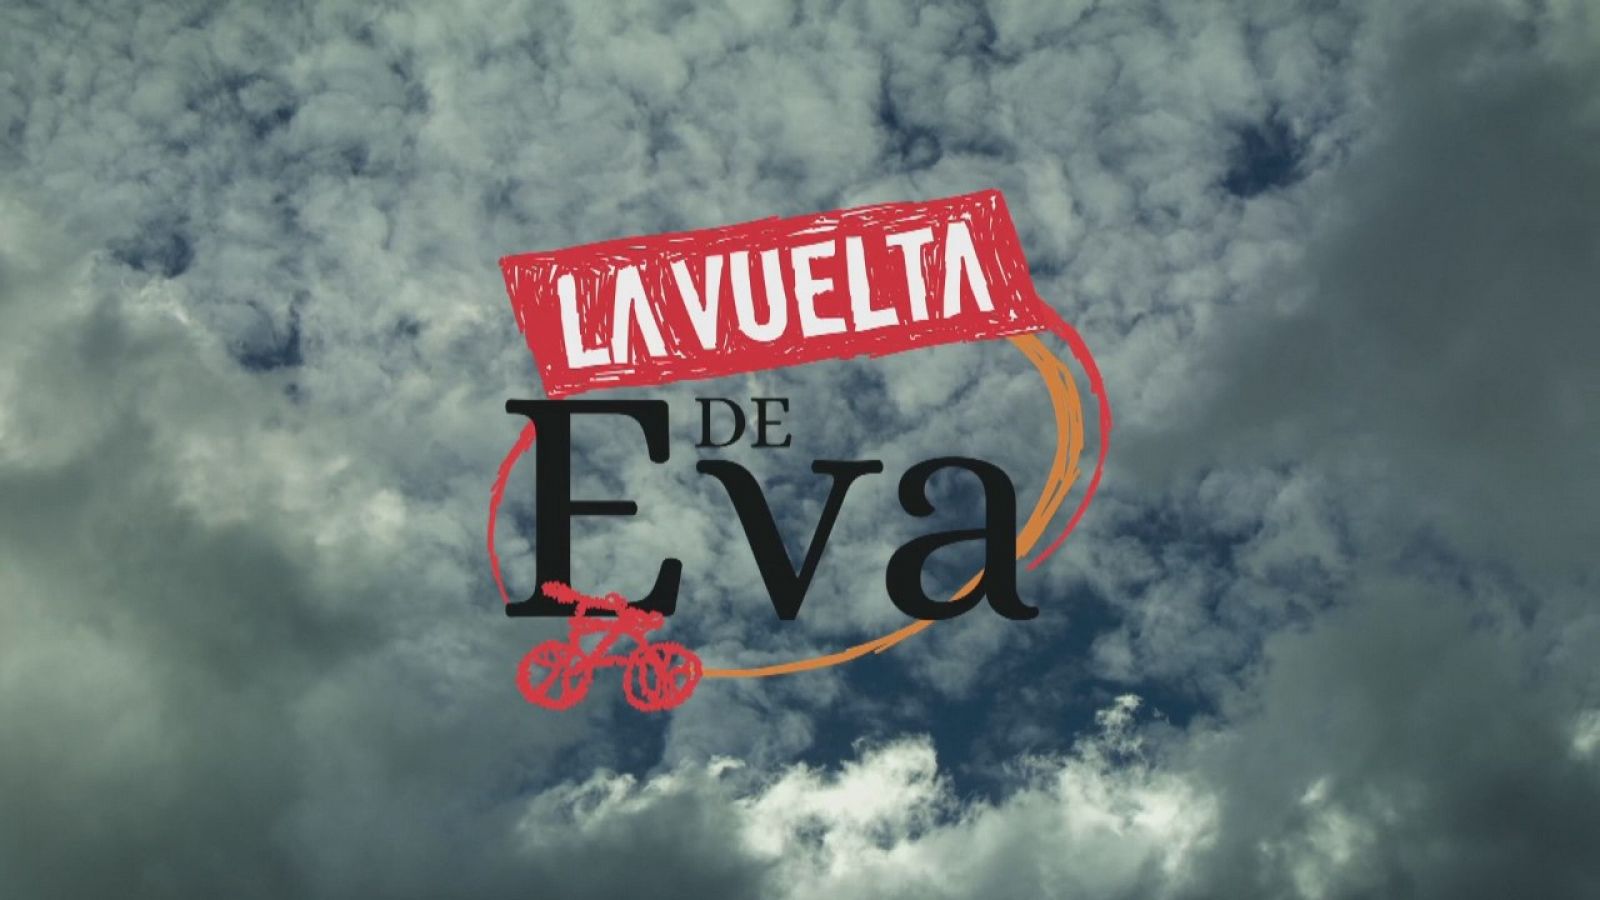 Ciclismo - Documental "La vuelta de Eva" - RTVE Play